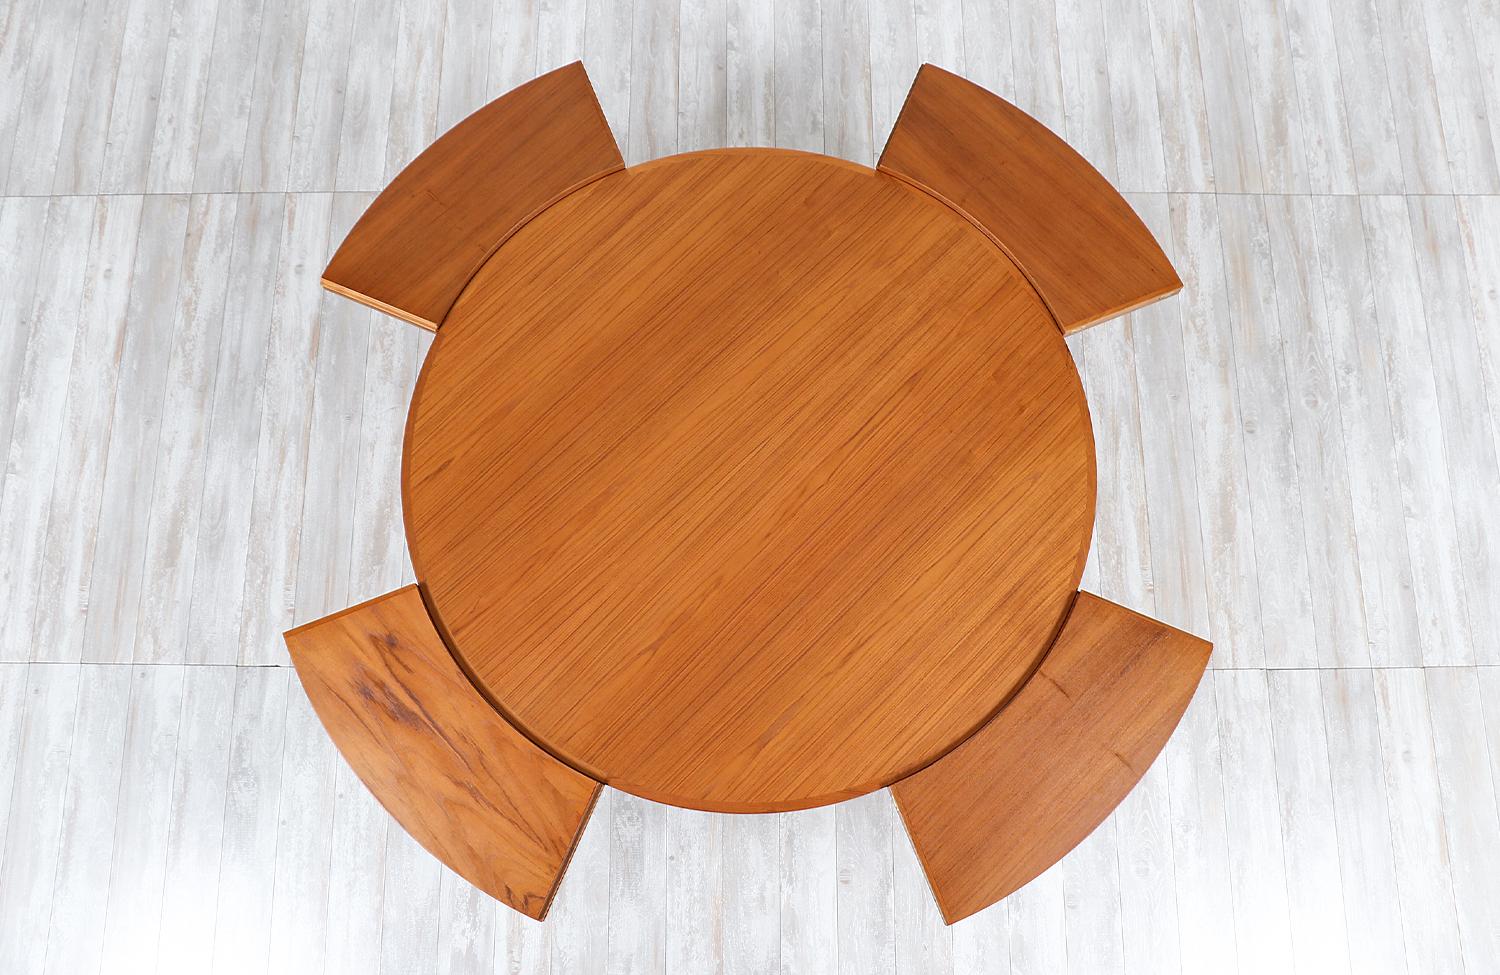 Danish Modern “Flip-Flap” Expanding Teak Dining Table by Dyrlund 2